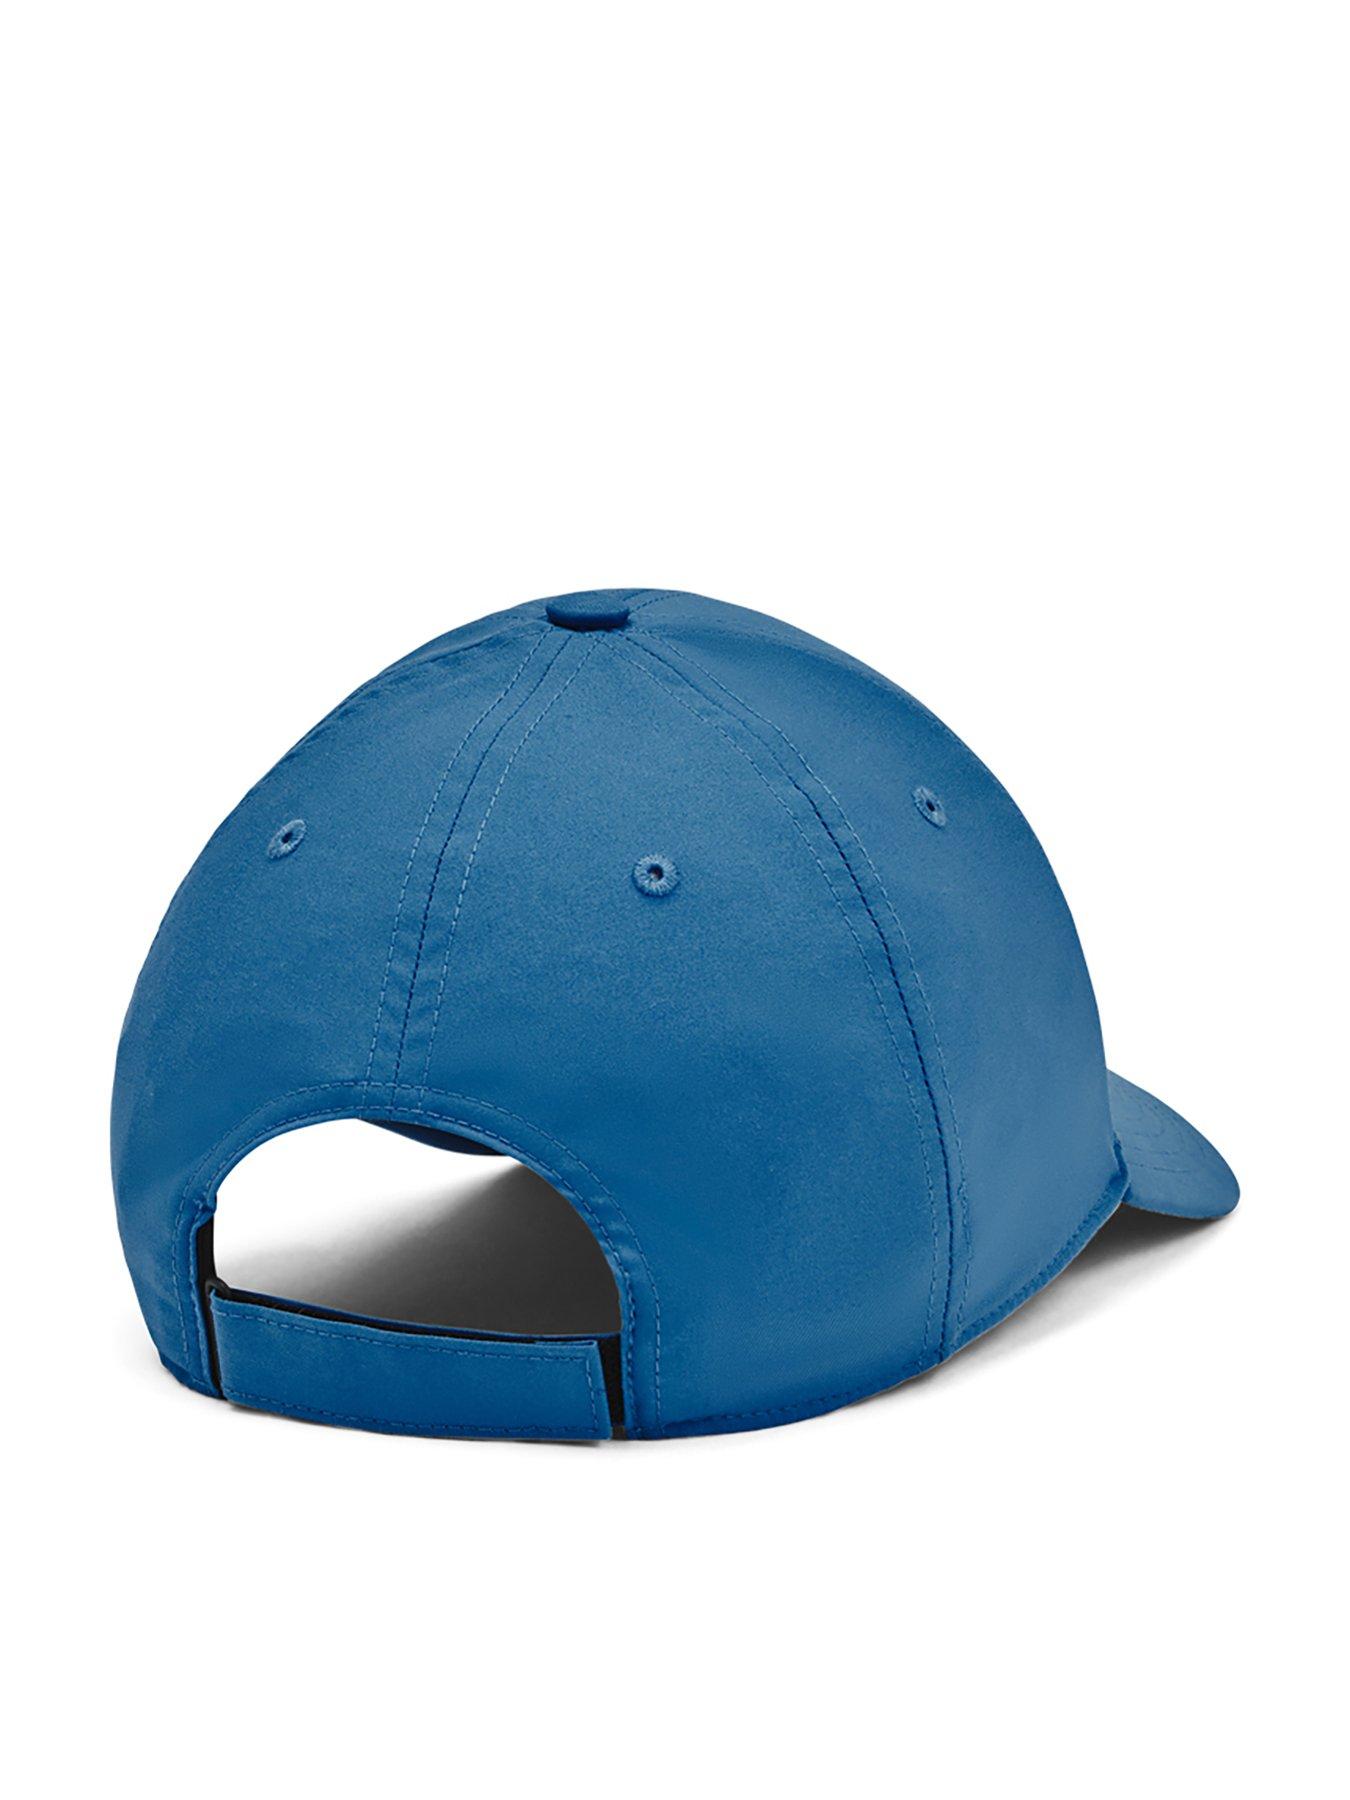 UNDER ARMOUR Men's Golf 96 Hat - Blue